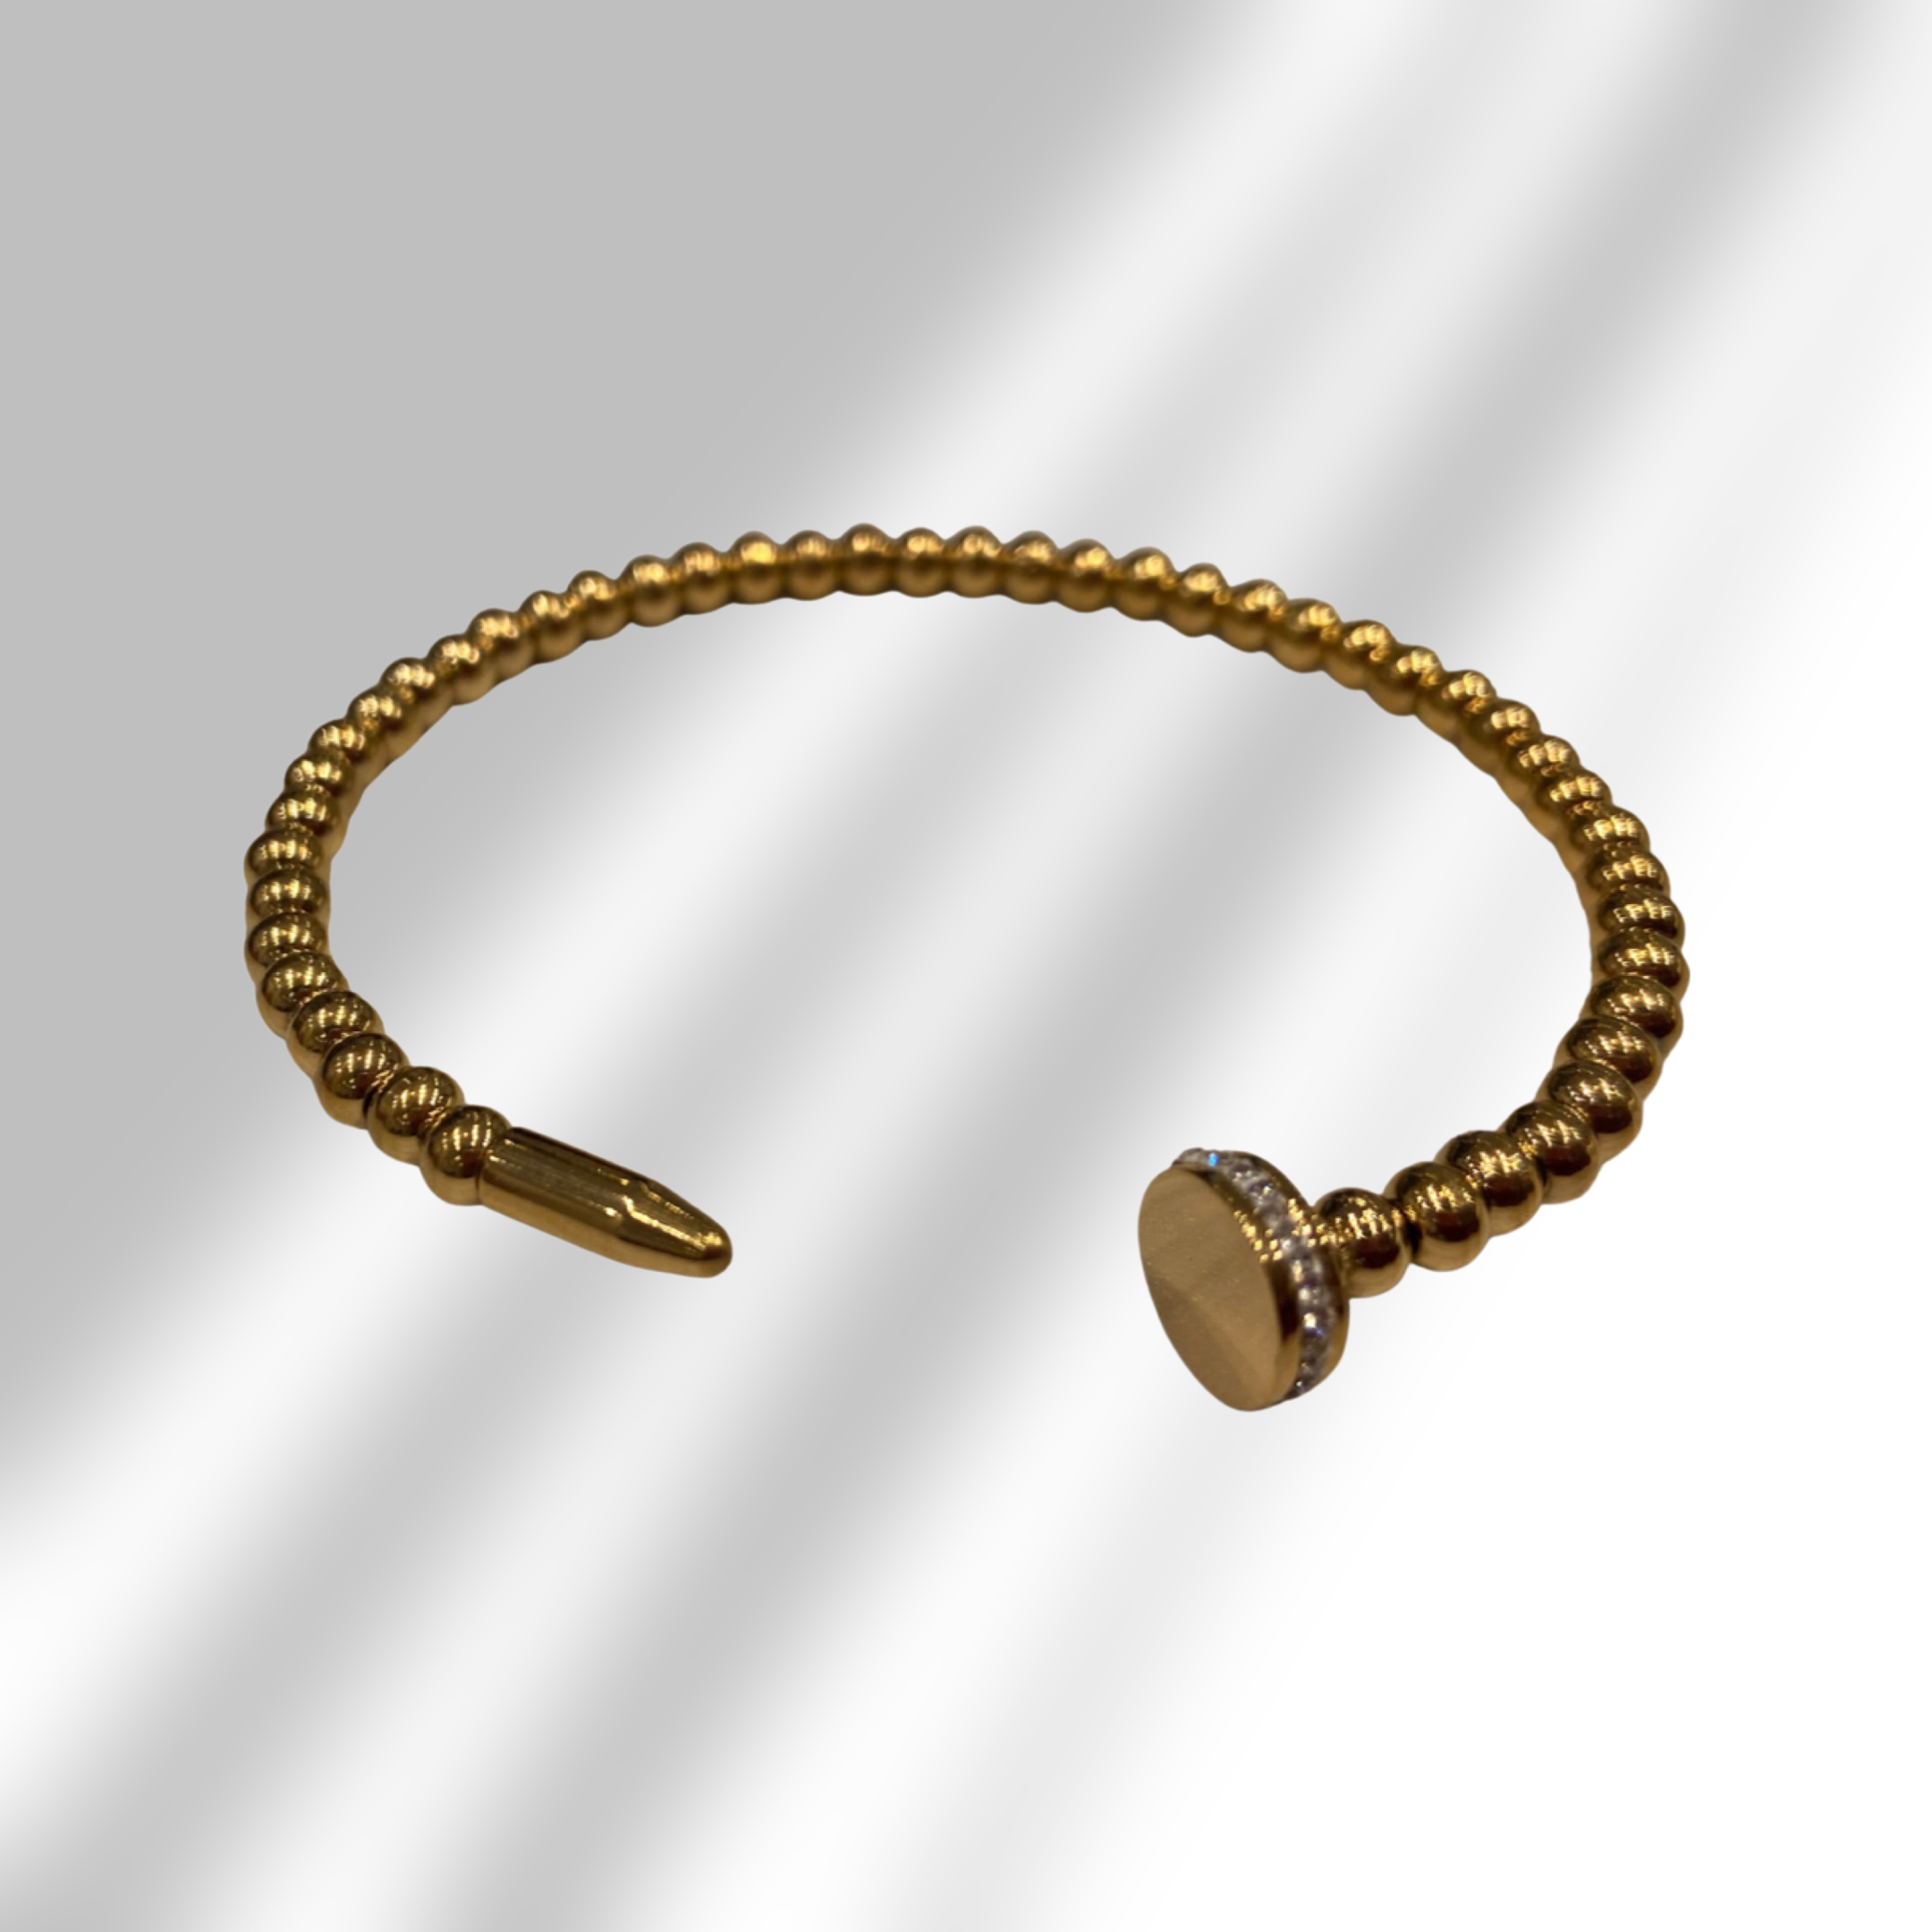 Nailhead Bracelet with beads